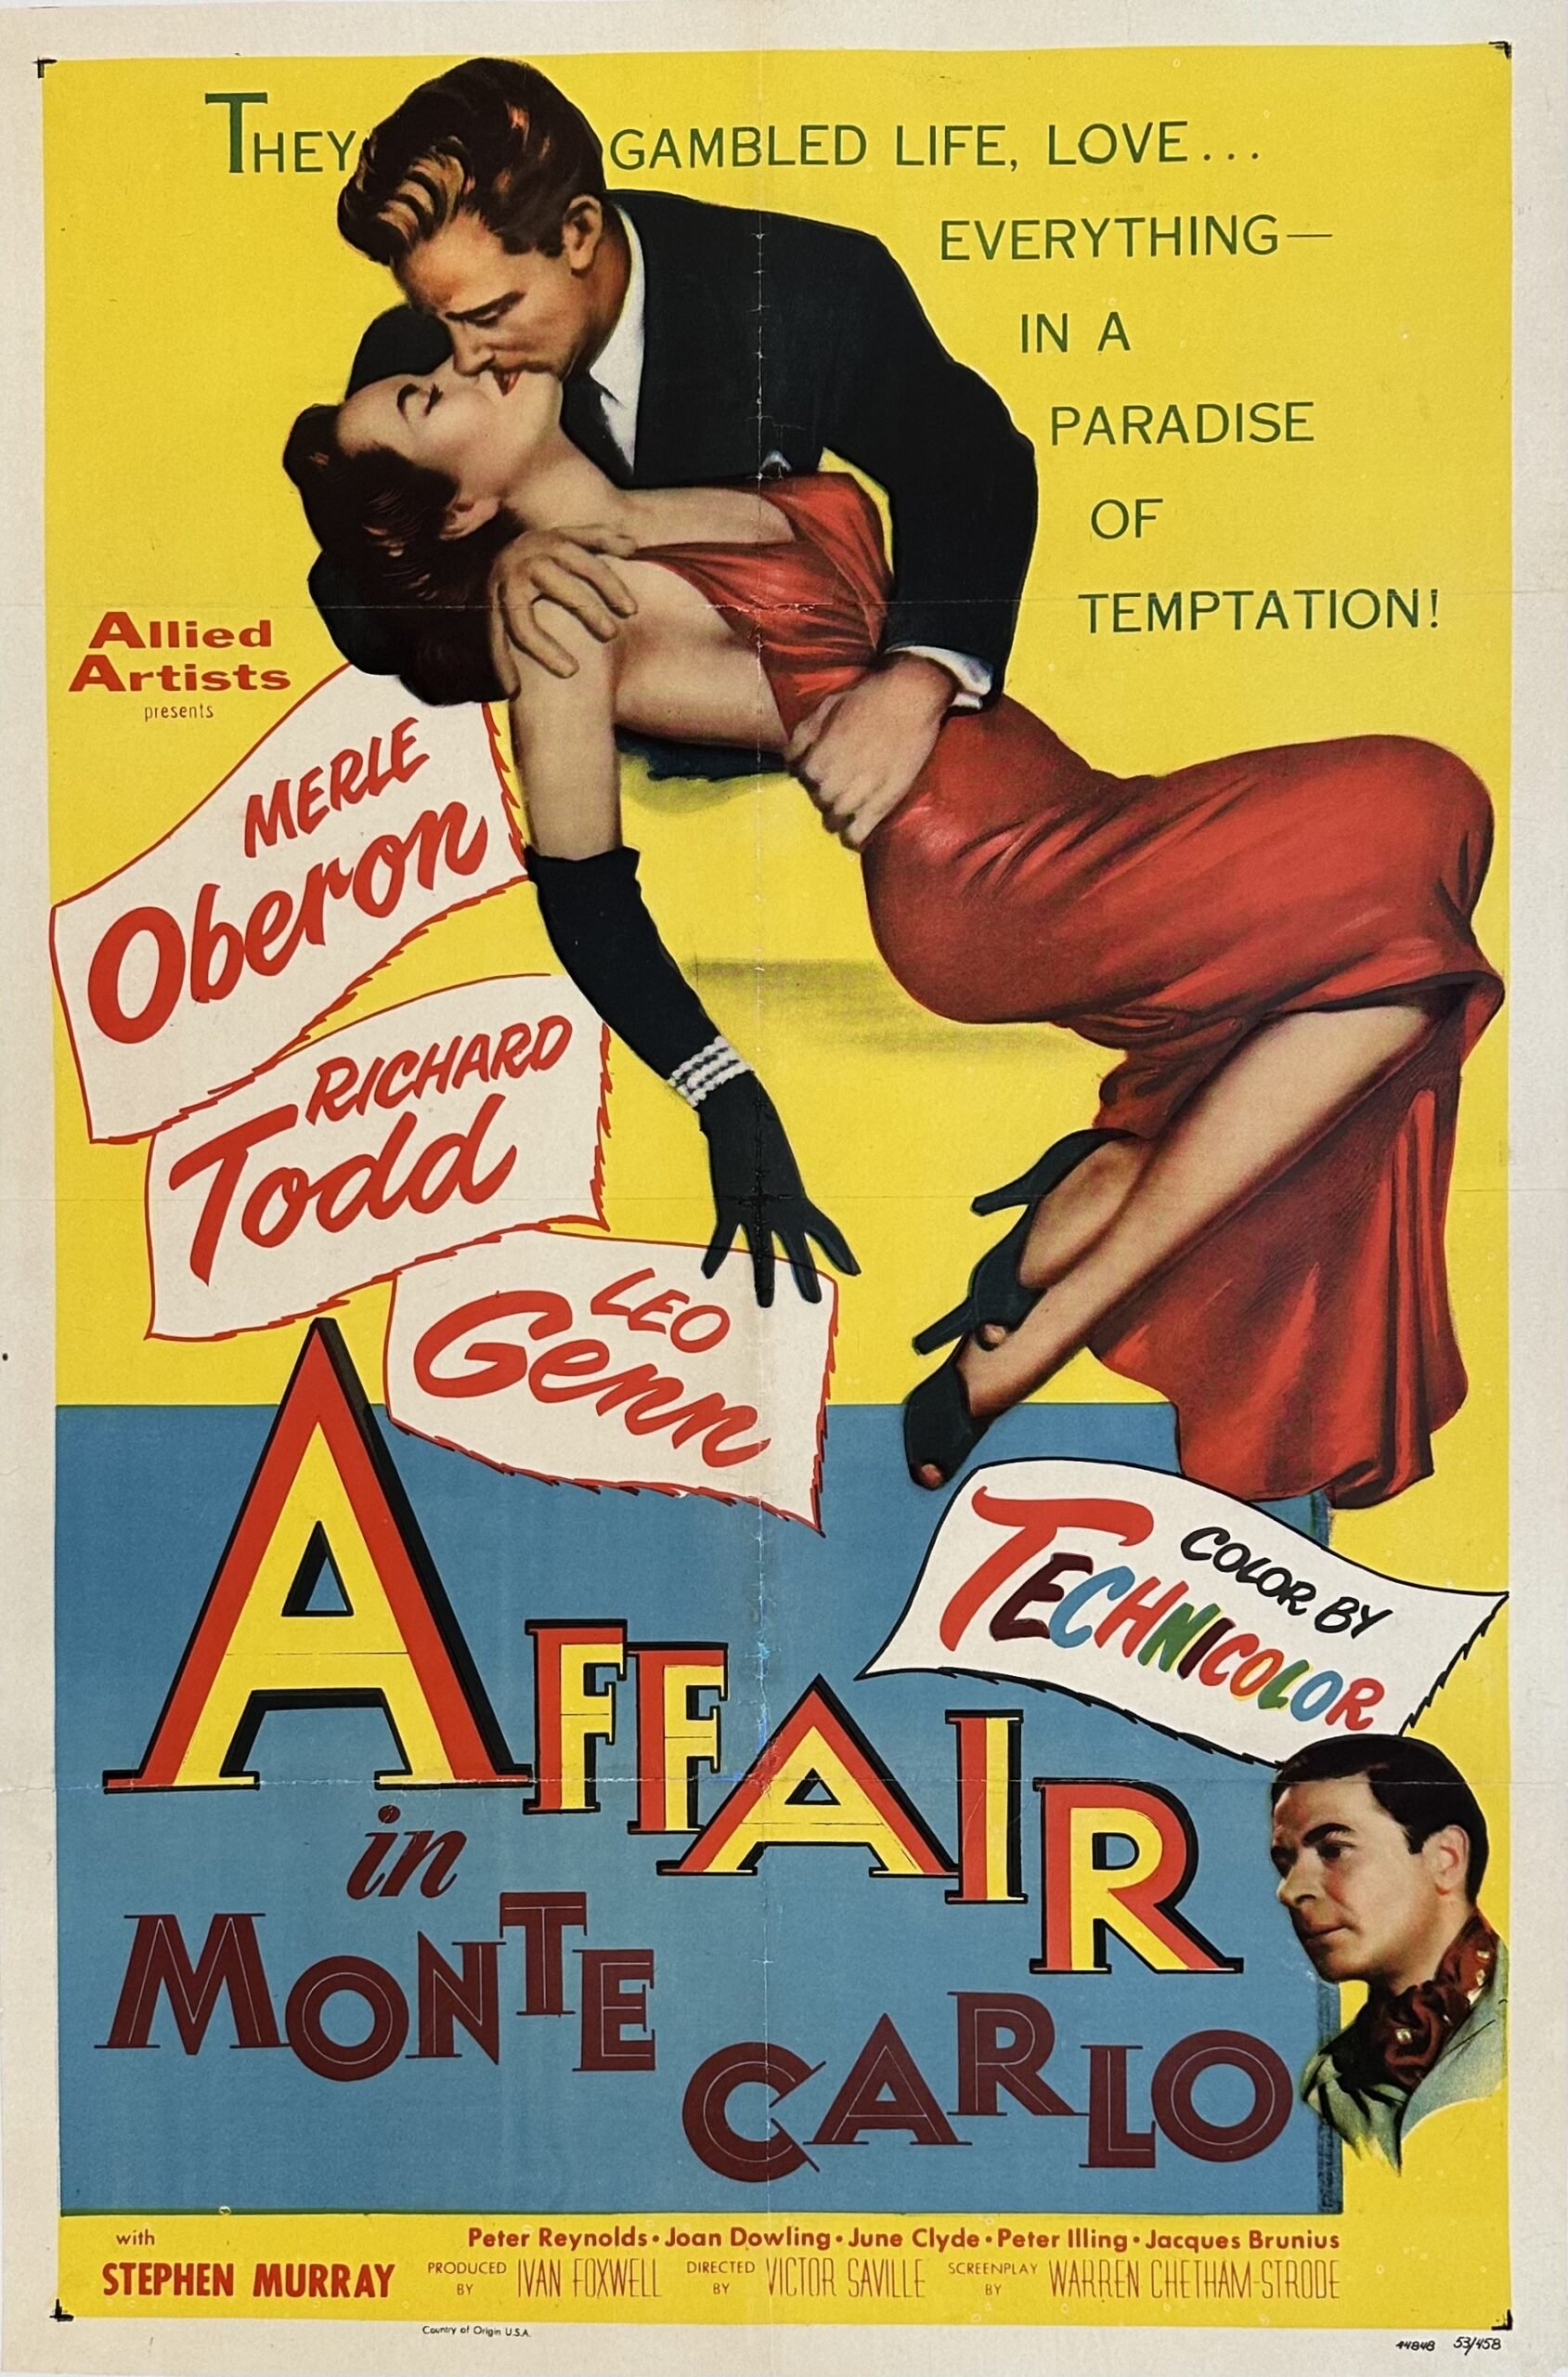 Original vintage cinema movie poster for the romance, Affair in Monte Carlo